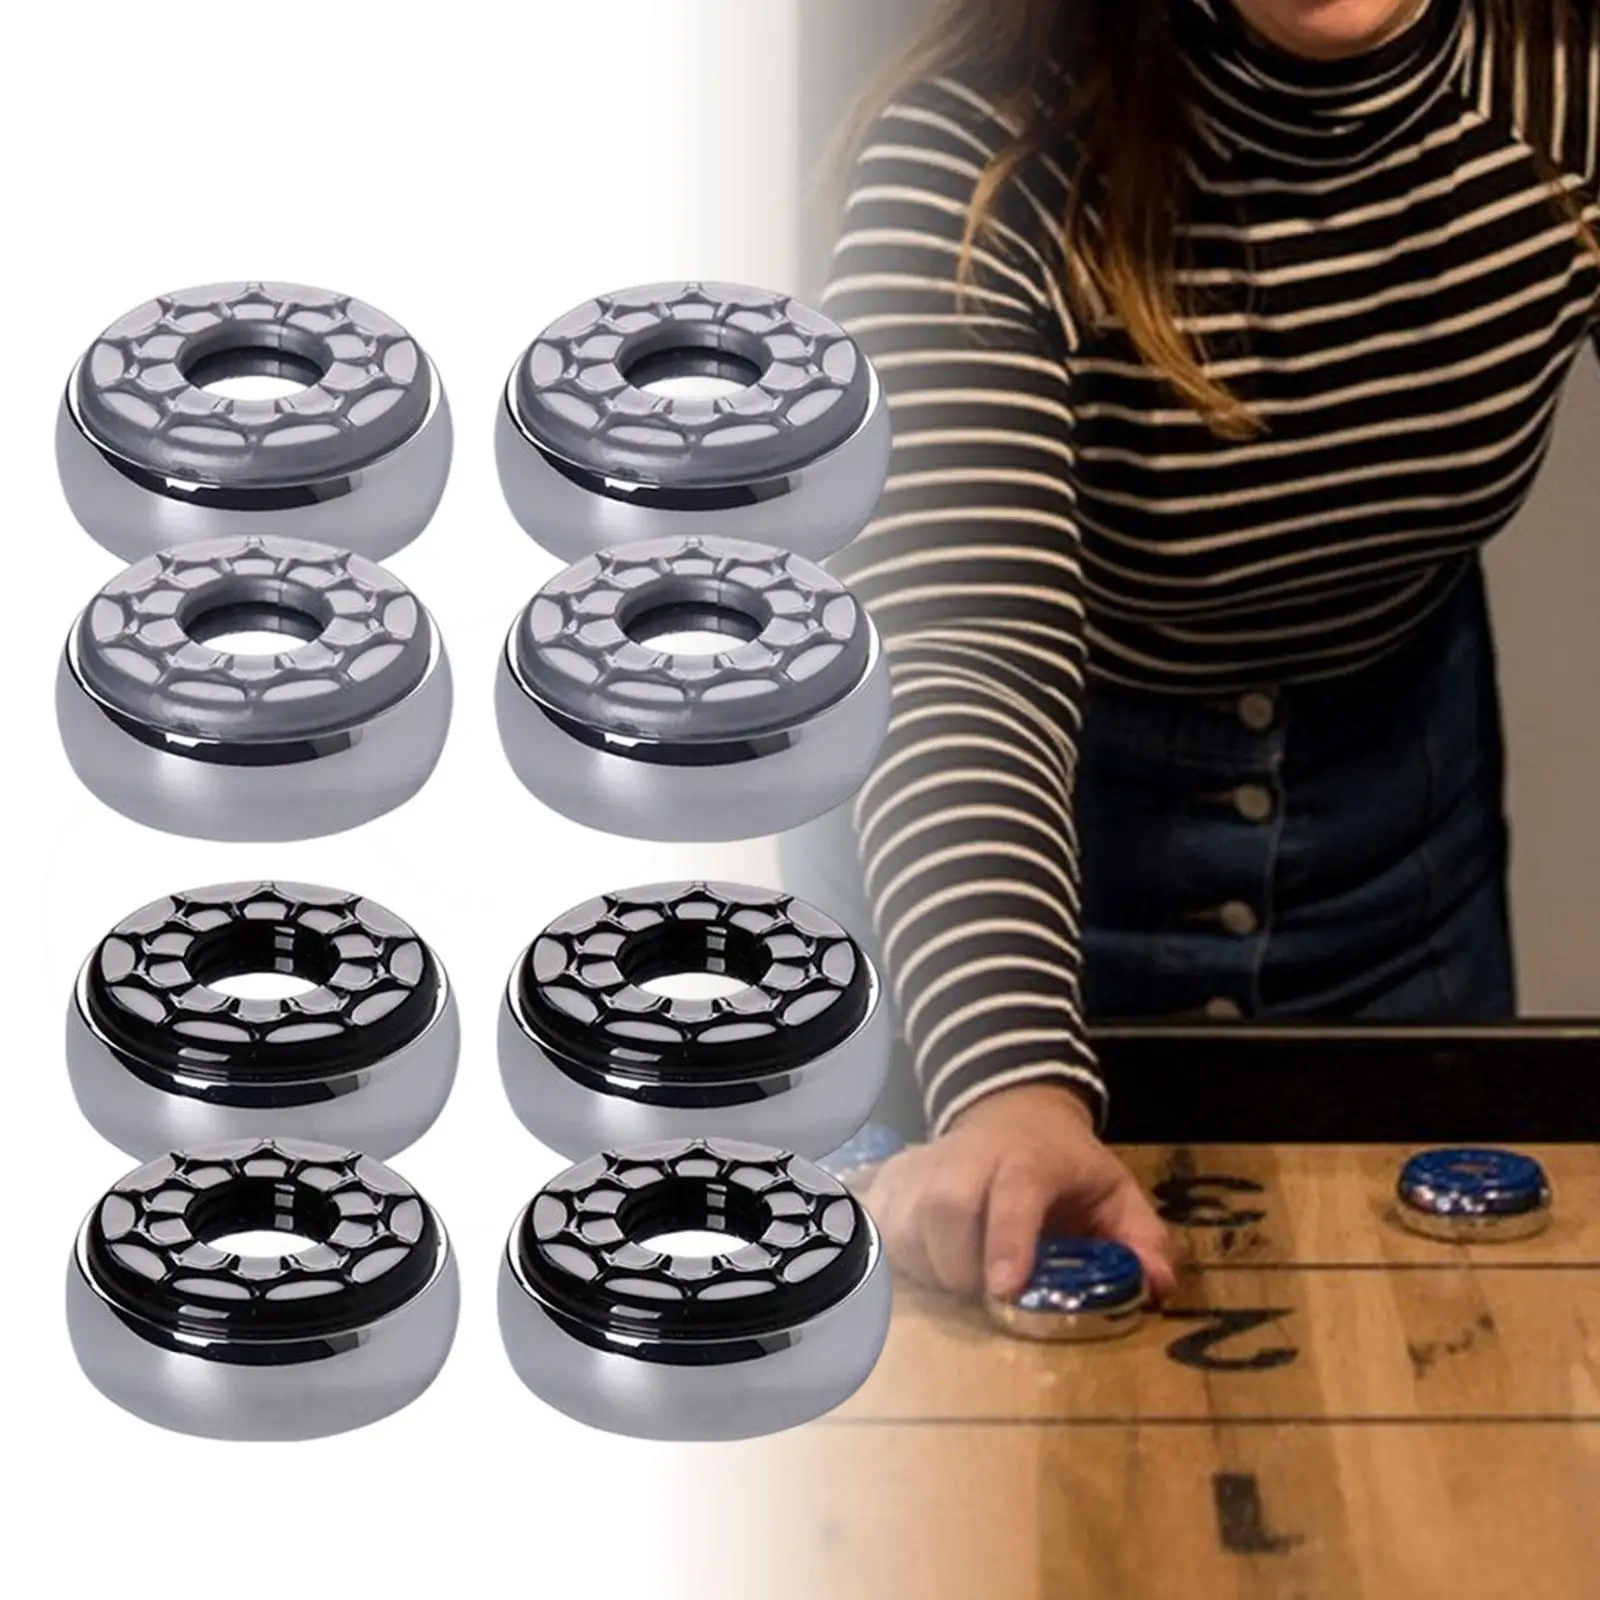 8x Shuffleboard Pucks Home Indoor Games (53mm) Replacements Shuffleboard Table Equipment